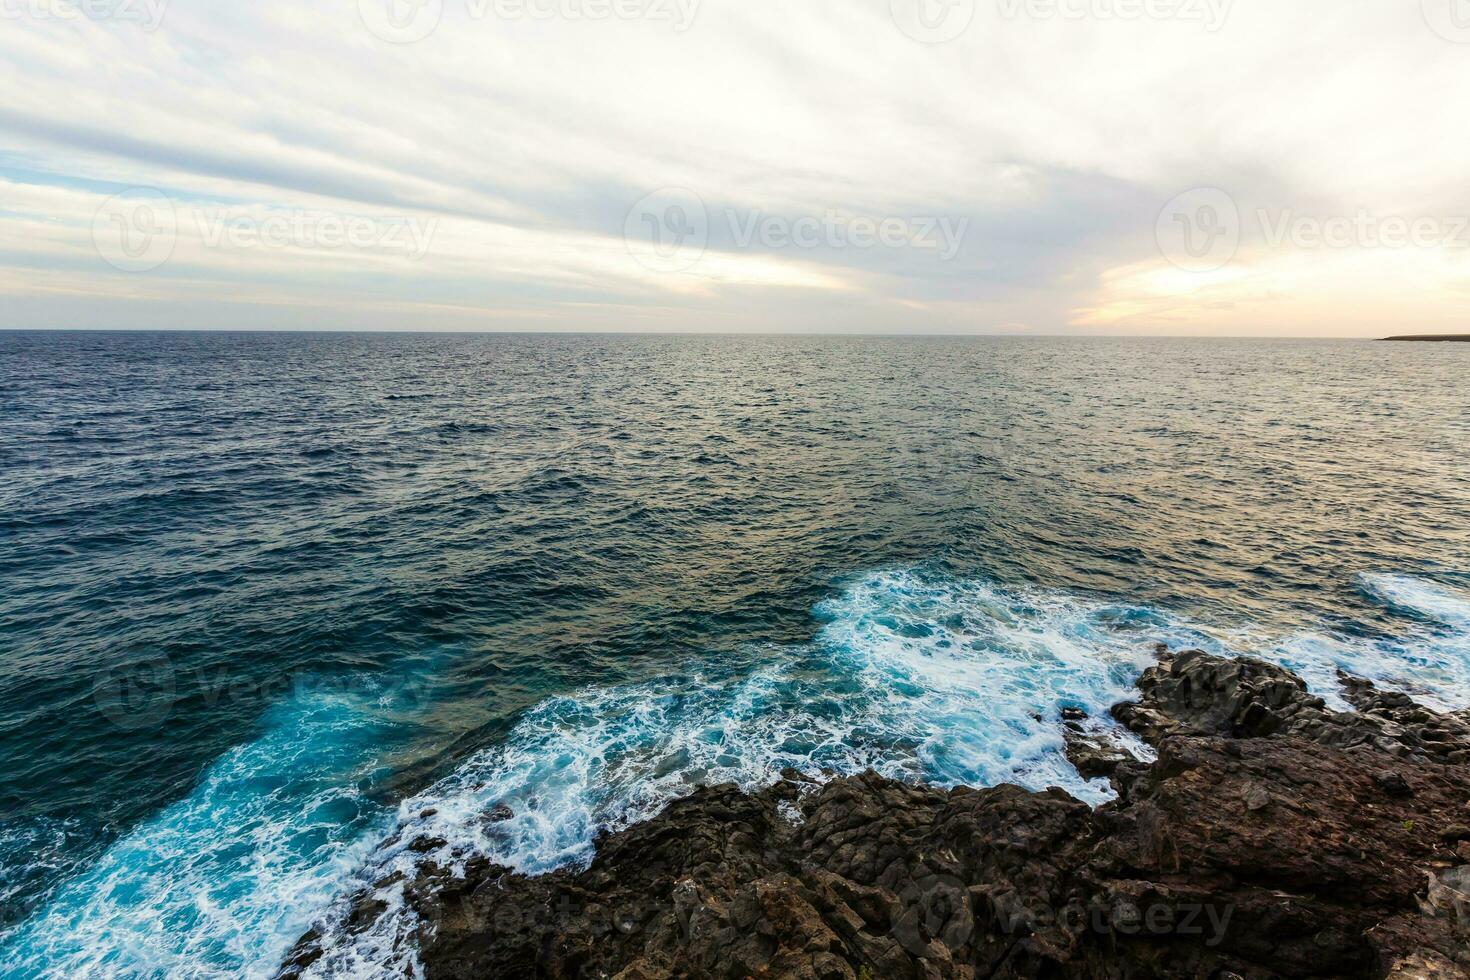 oceano onde colpire e schianto contro pietre foto